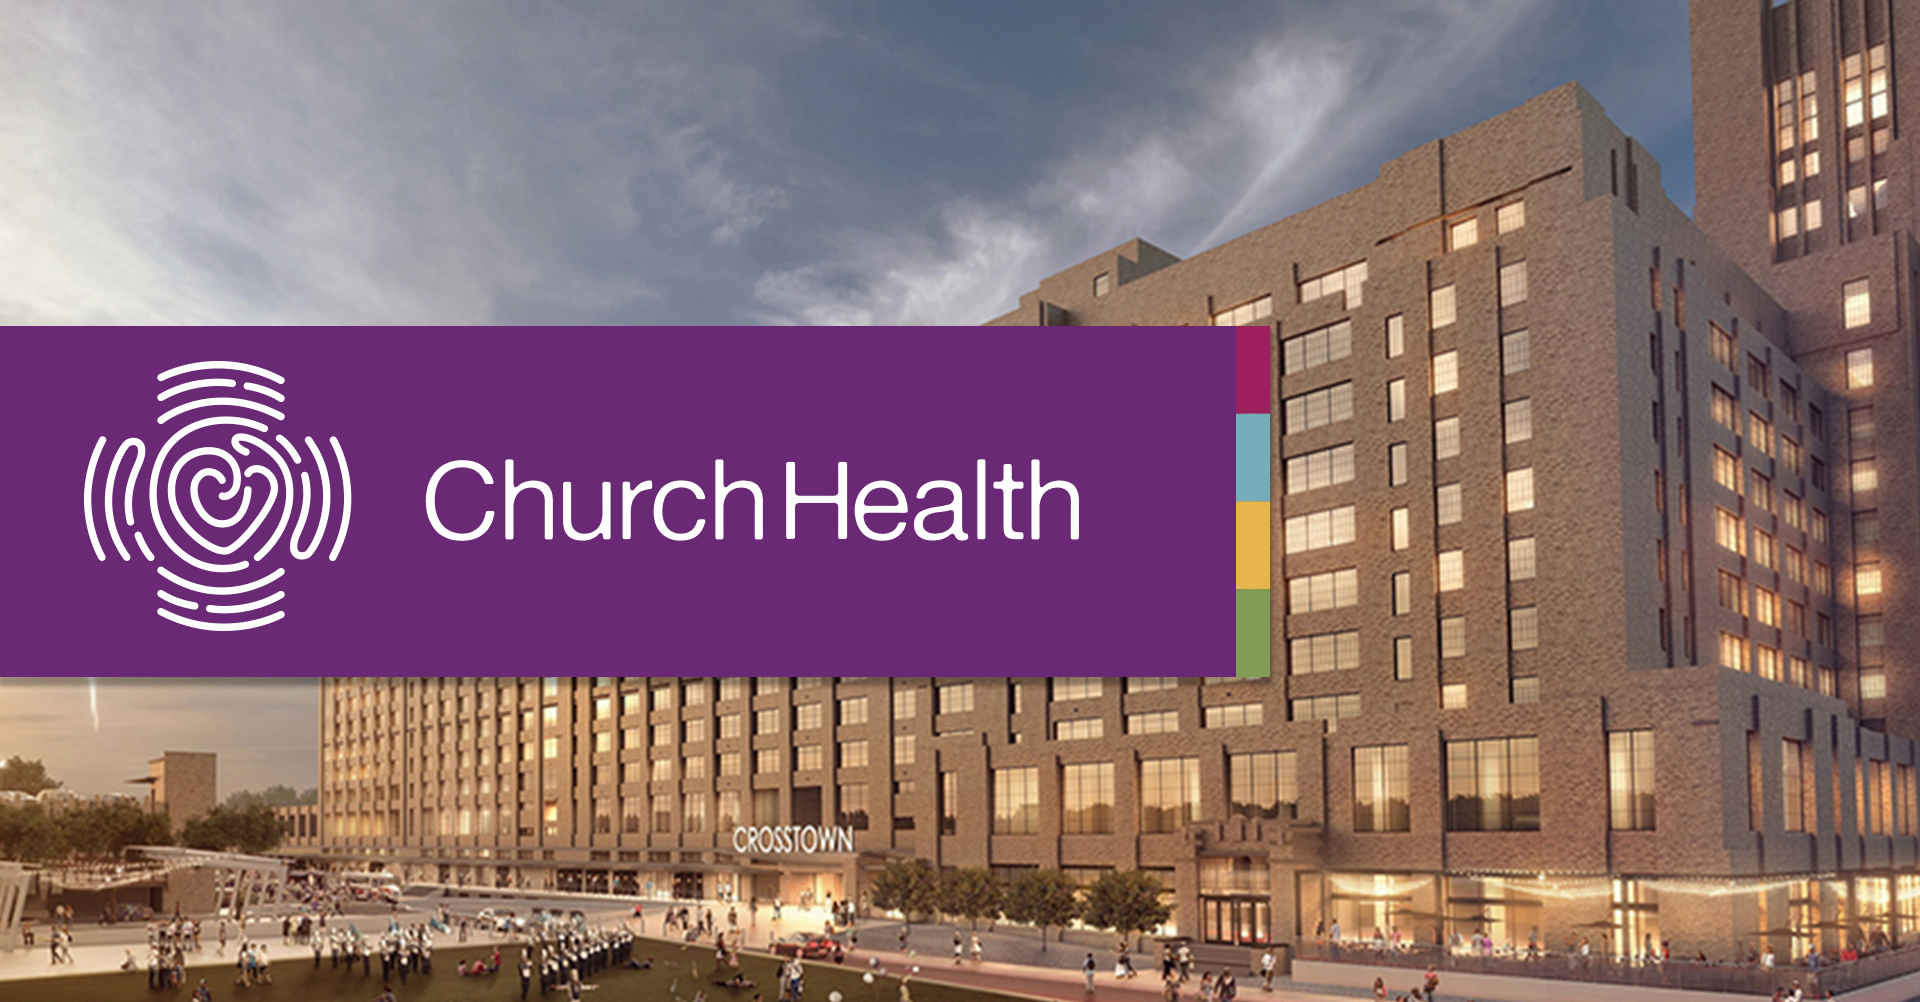 Church Health | Medical Clinic, Nutrition Education, Wellness Services